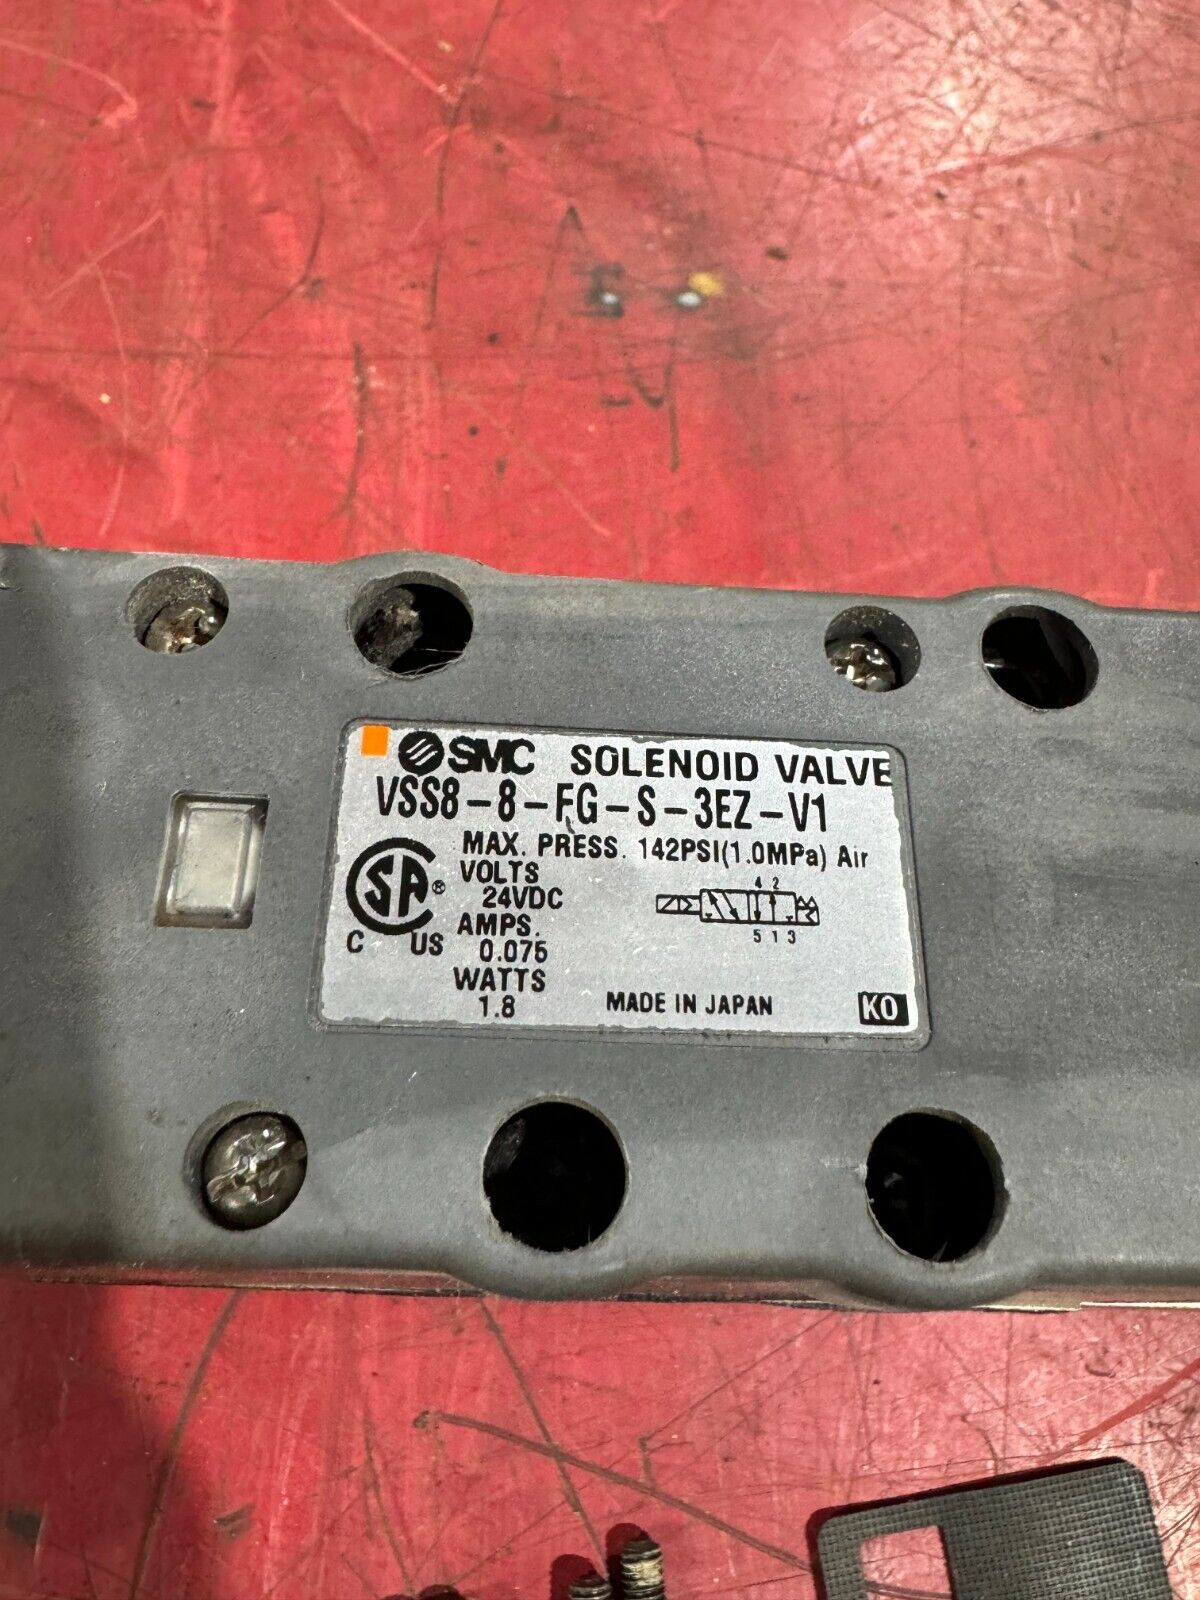 USED SMC SOLENOID VALVE VSS8-8-FG-S-3EZ-V1 WITH NARB350-N0